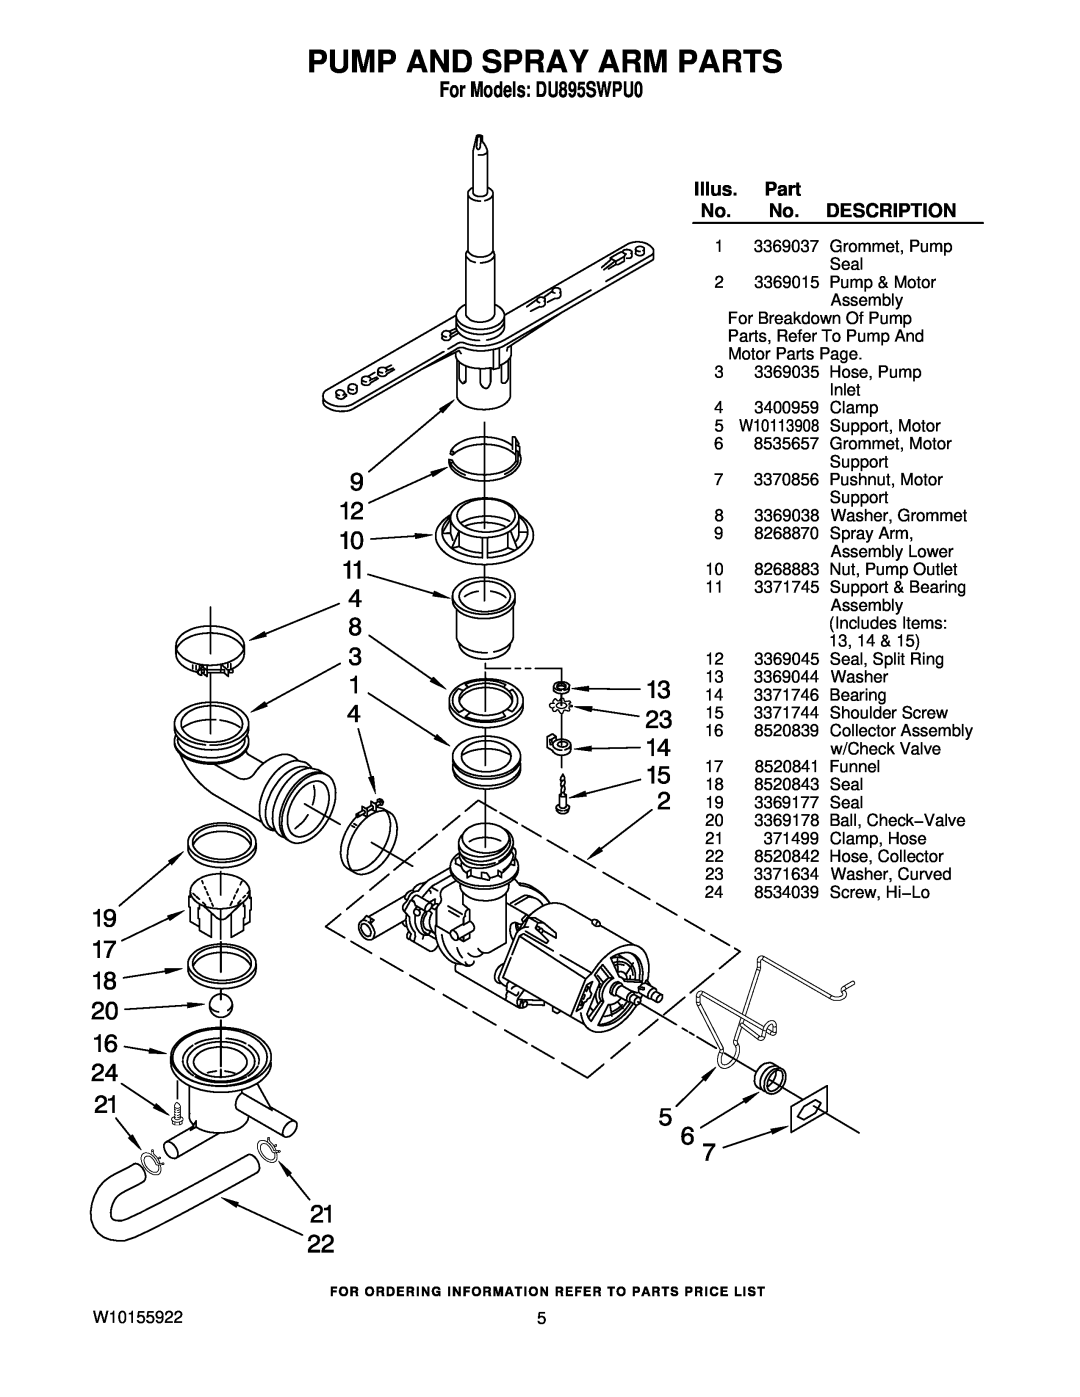 Whirlpool manual Pump And Spray Arm Parts, Illus, Description, For Models DU895SWPU0 